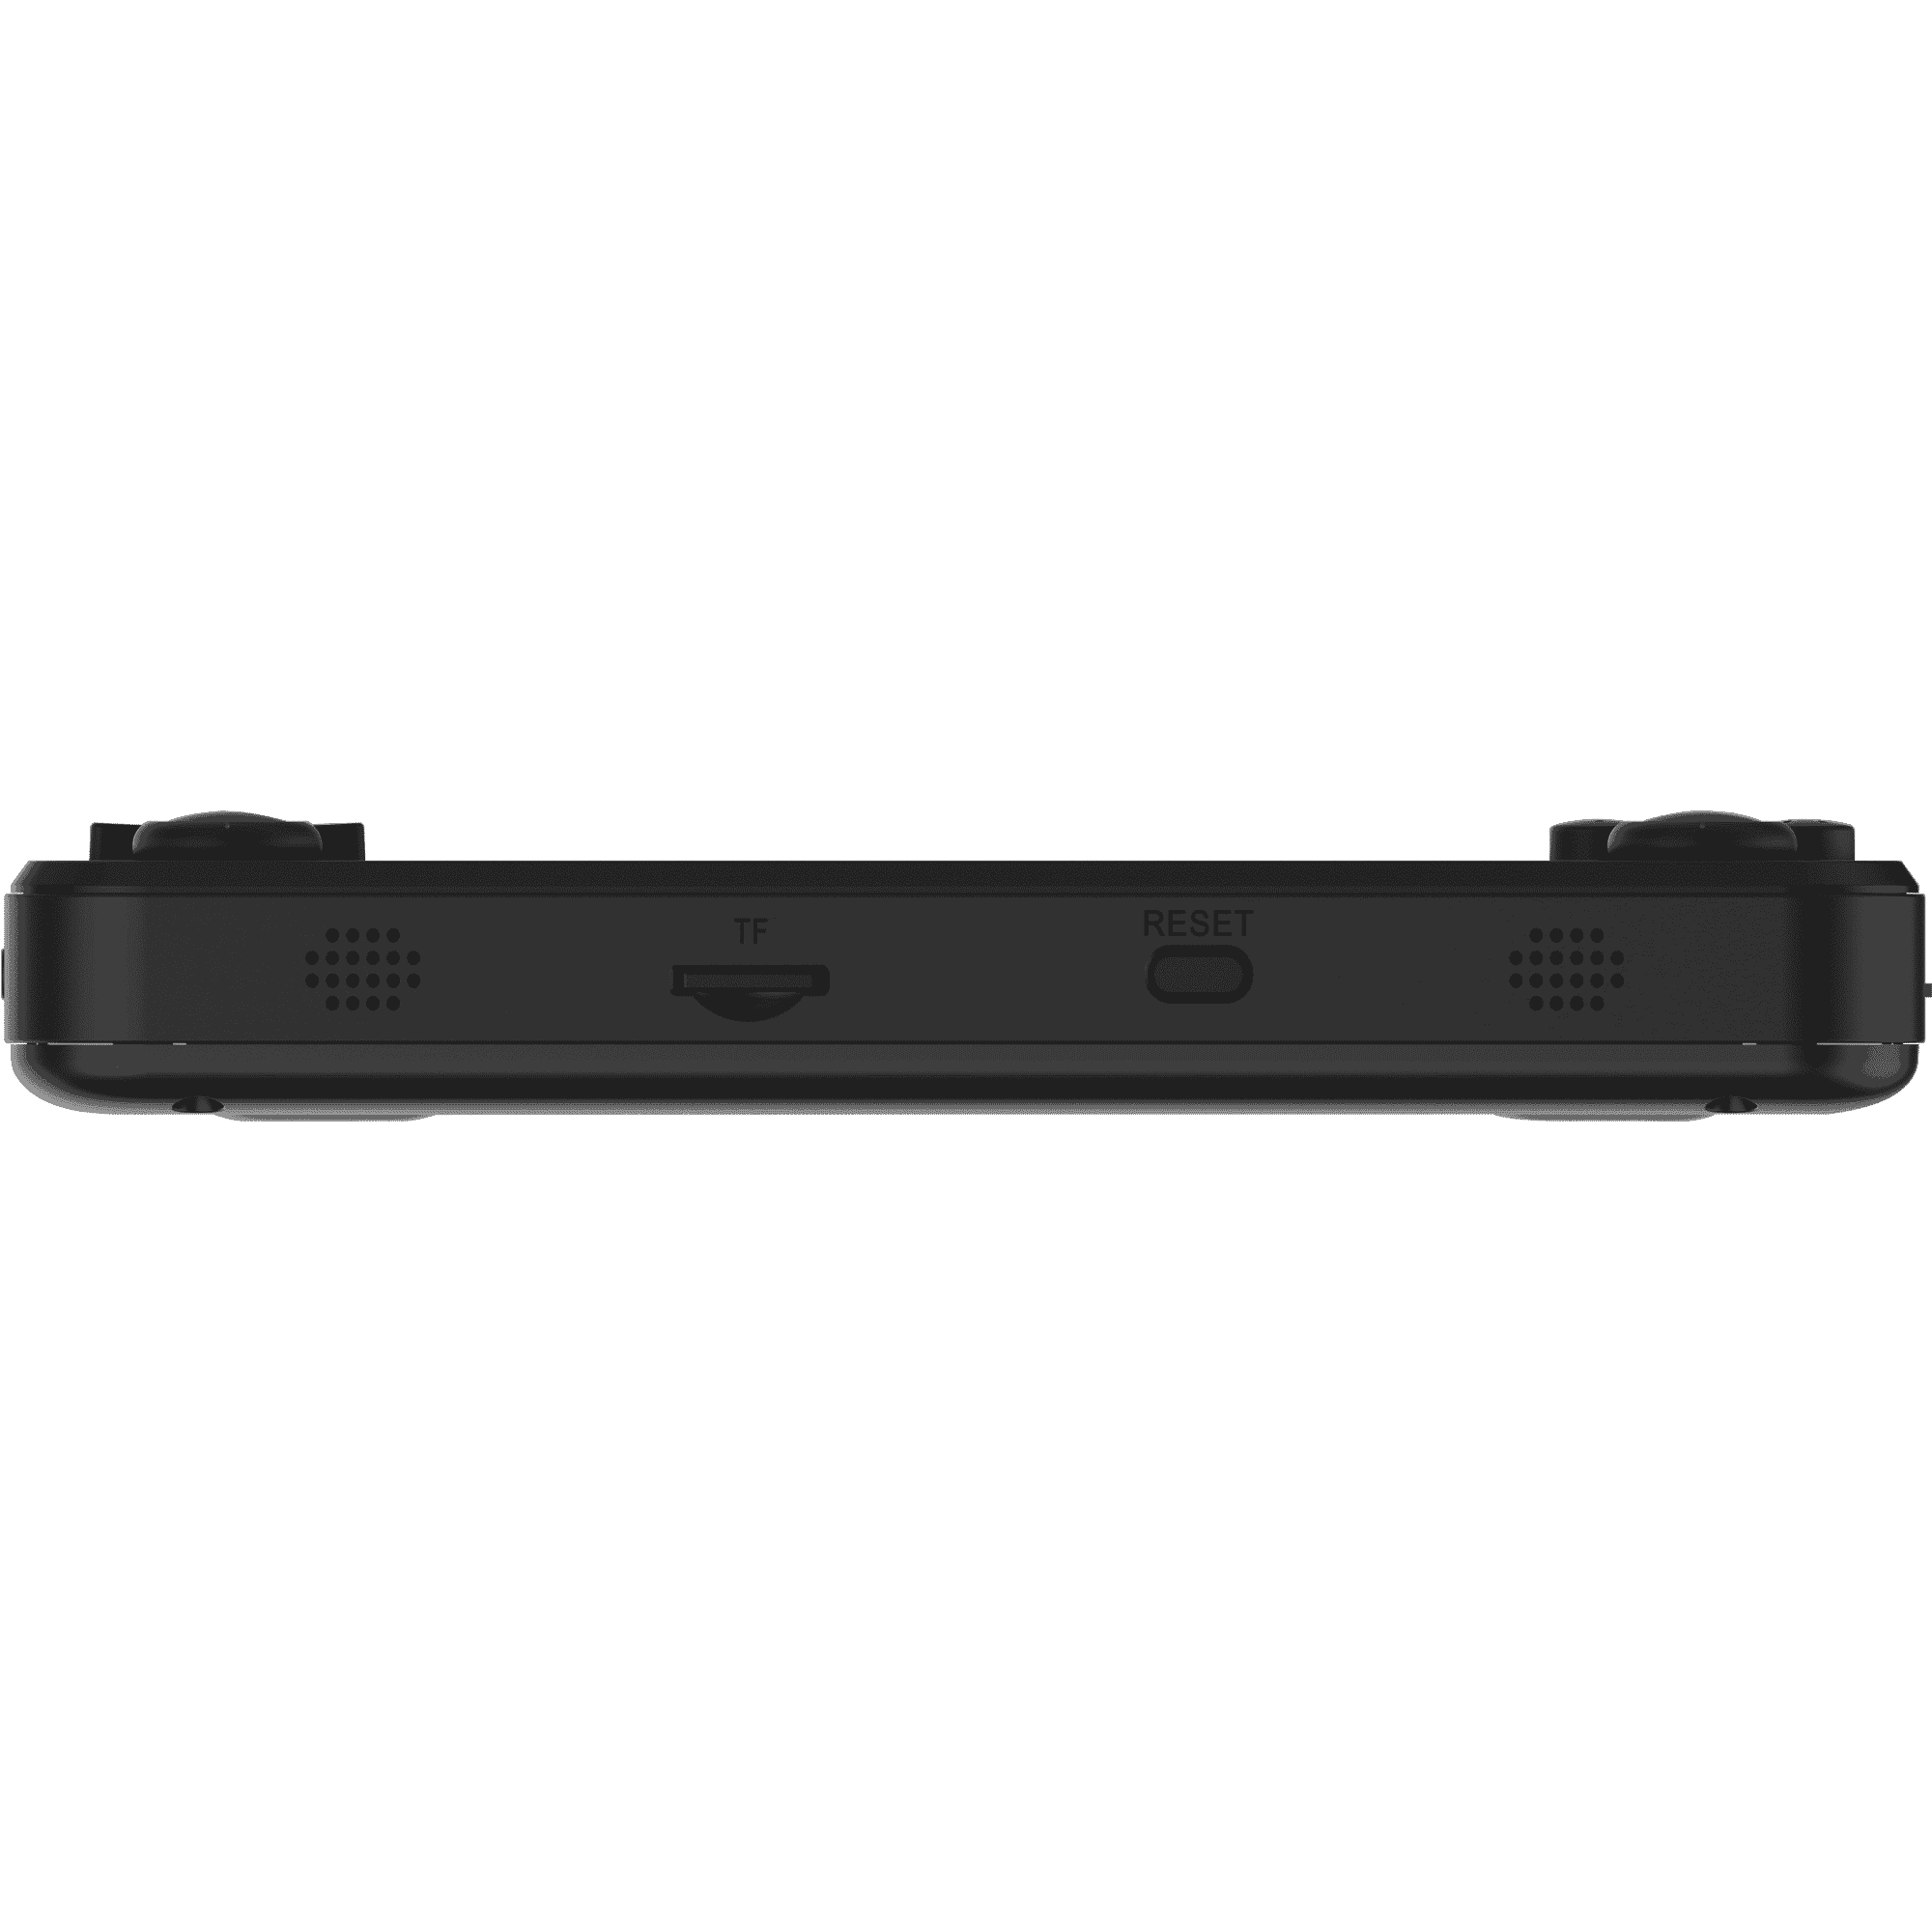 ANBERNIC RG351P Quad Core Retro Gaming Handheld - Buy Now